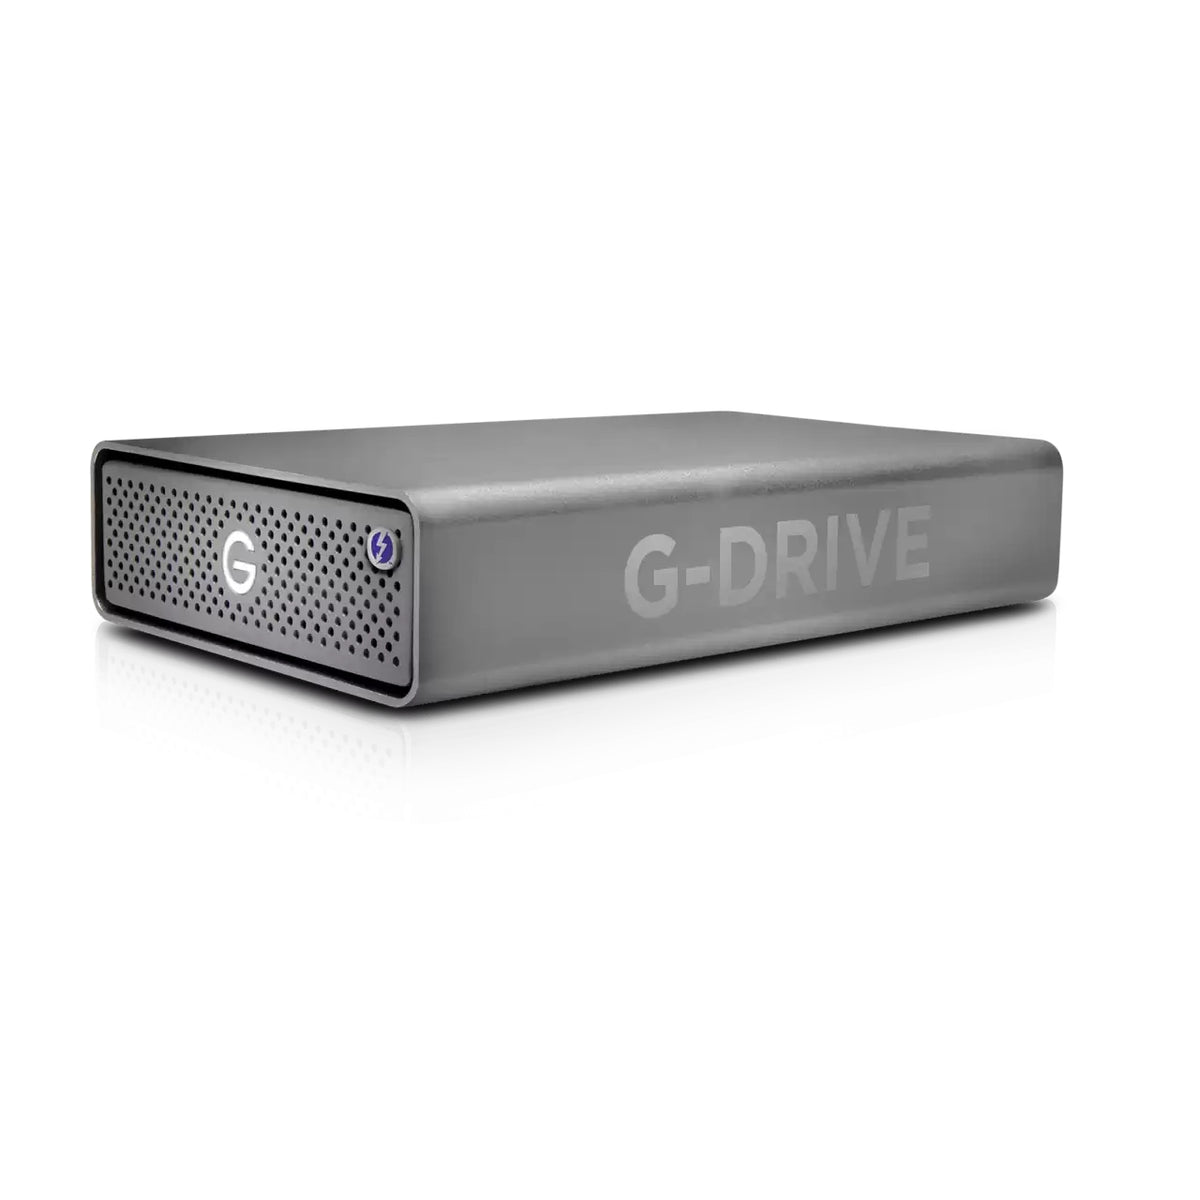 SanDisk Professional G-DRIVE PRO - Hard Drive - 12 TB - External (desktop) - USB 3.2 Gen 1 / Thunderbolt 3 (USB C Connector) - 7200 rpm - Space Gray